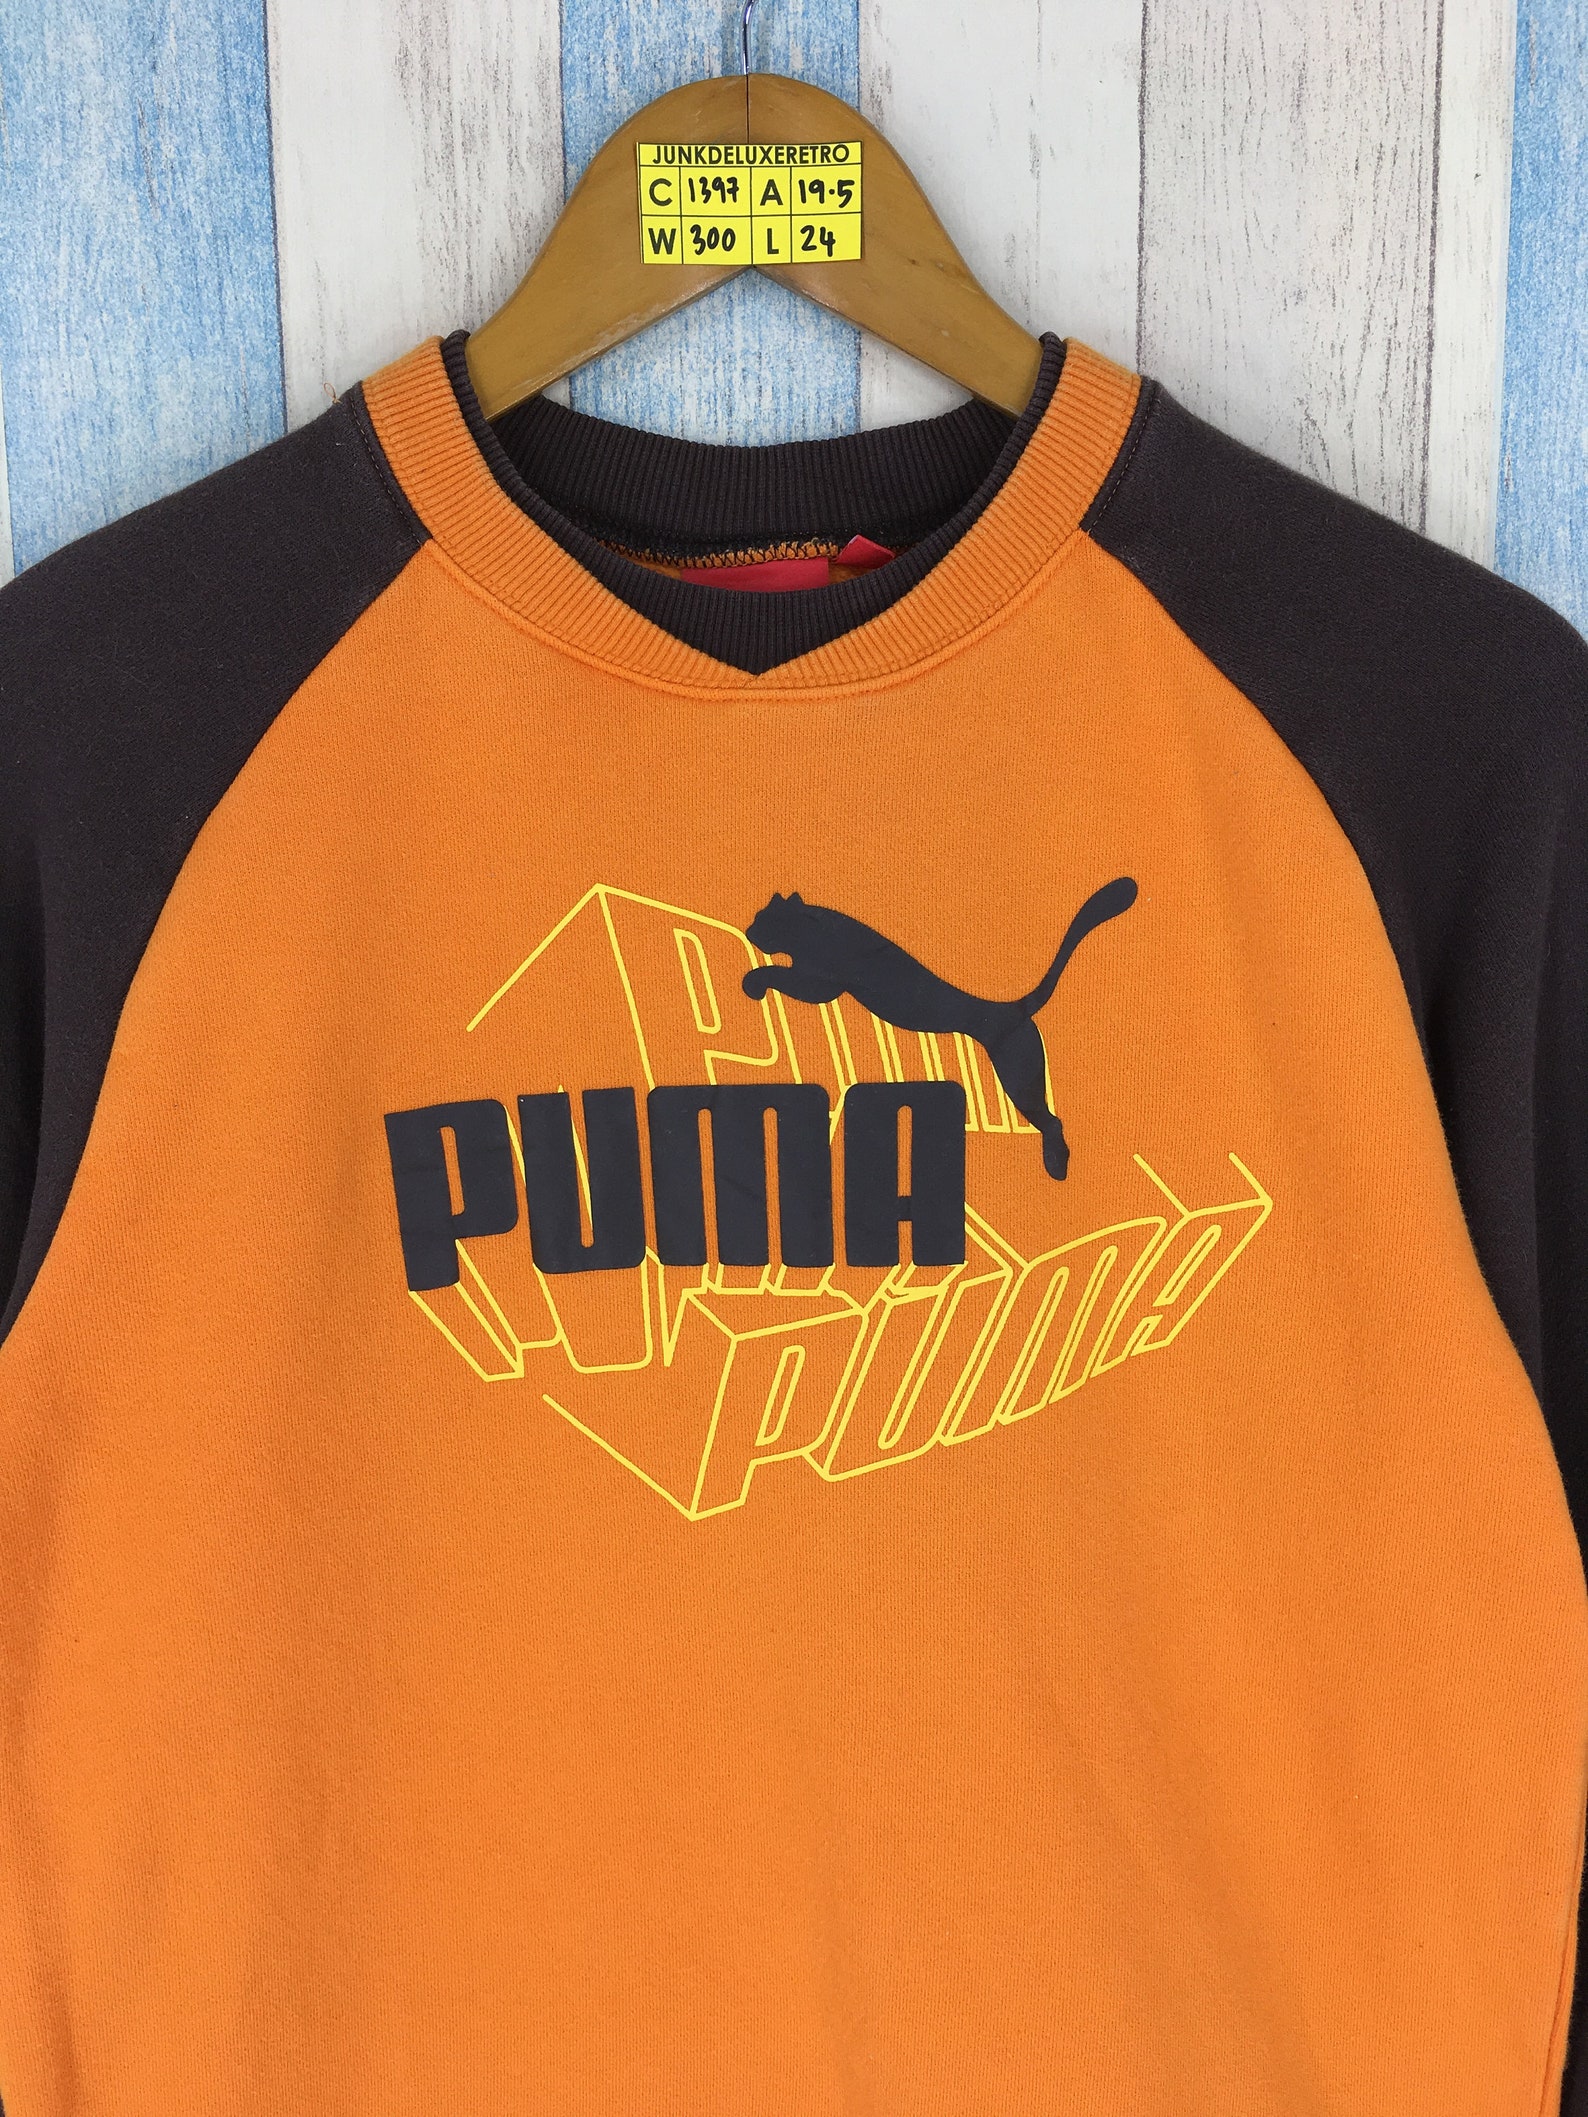 Vintage 90's Puma Sweatshirt Small Puma Cougar Big Logo | Etsy